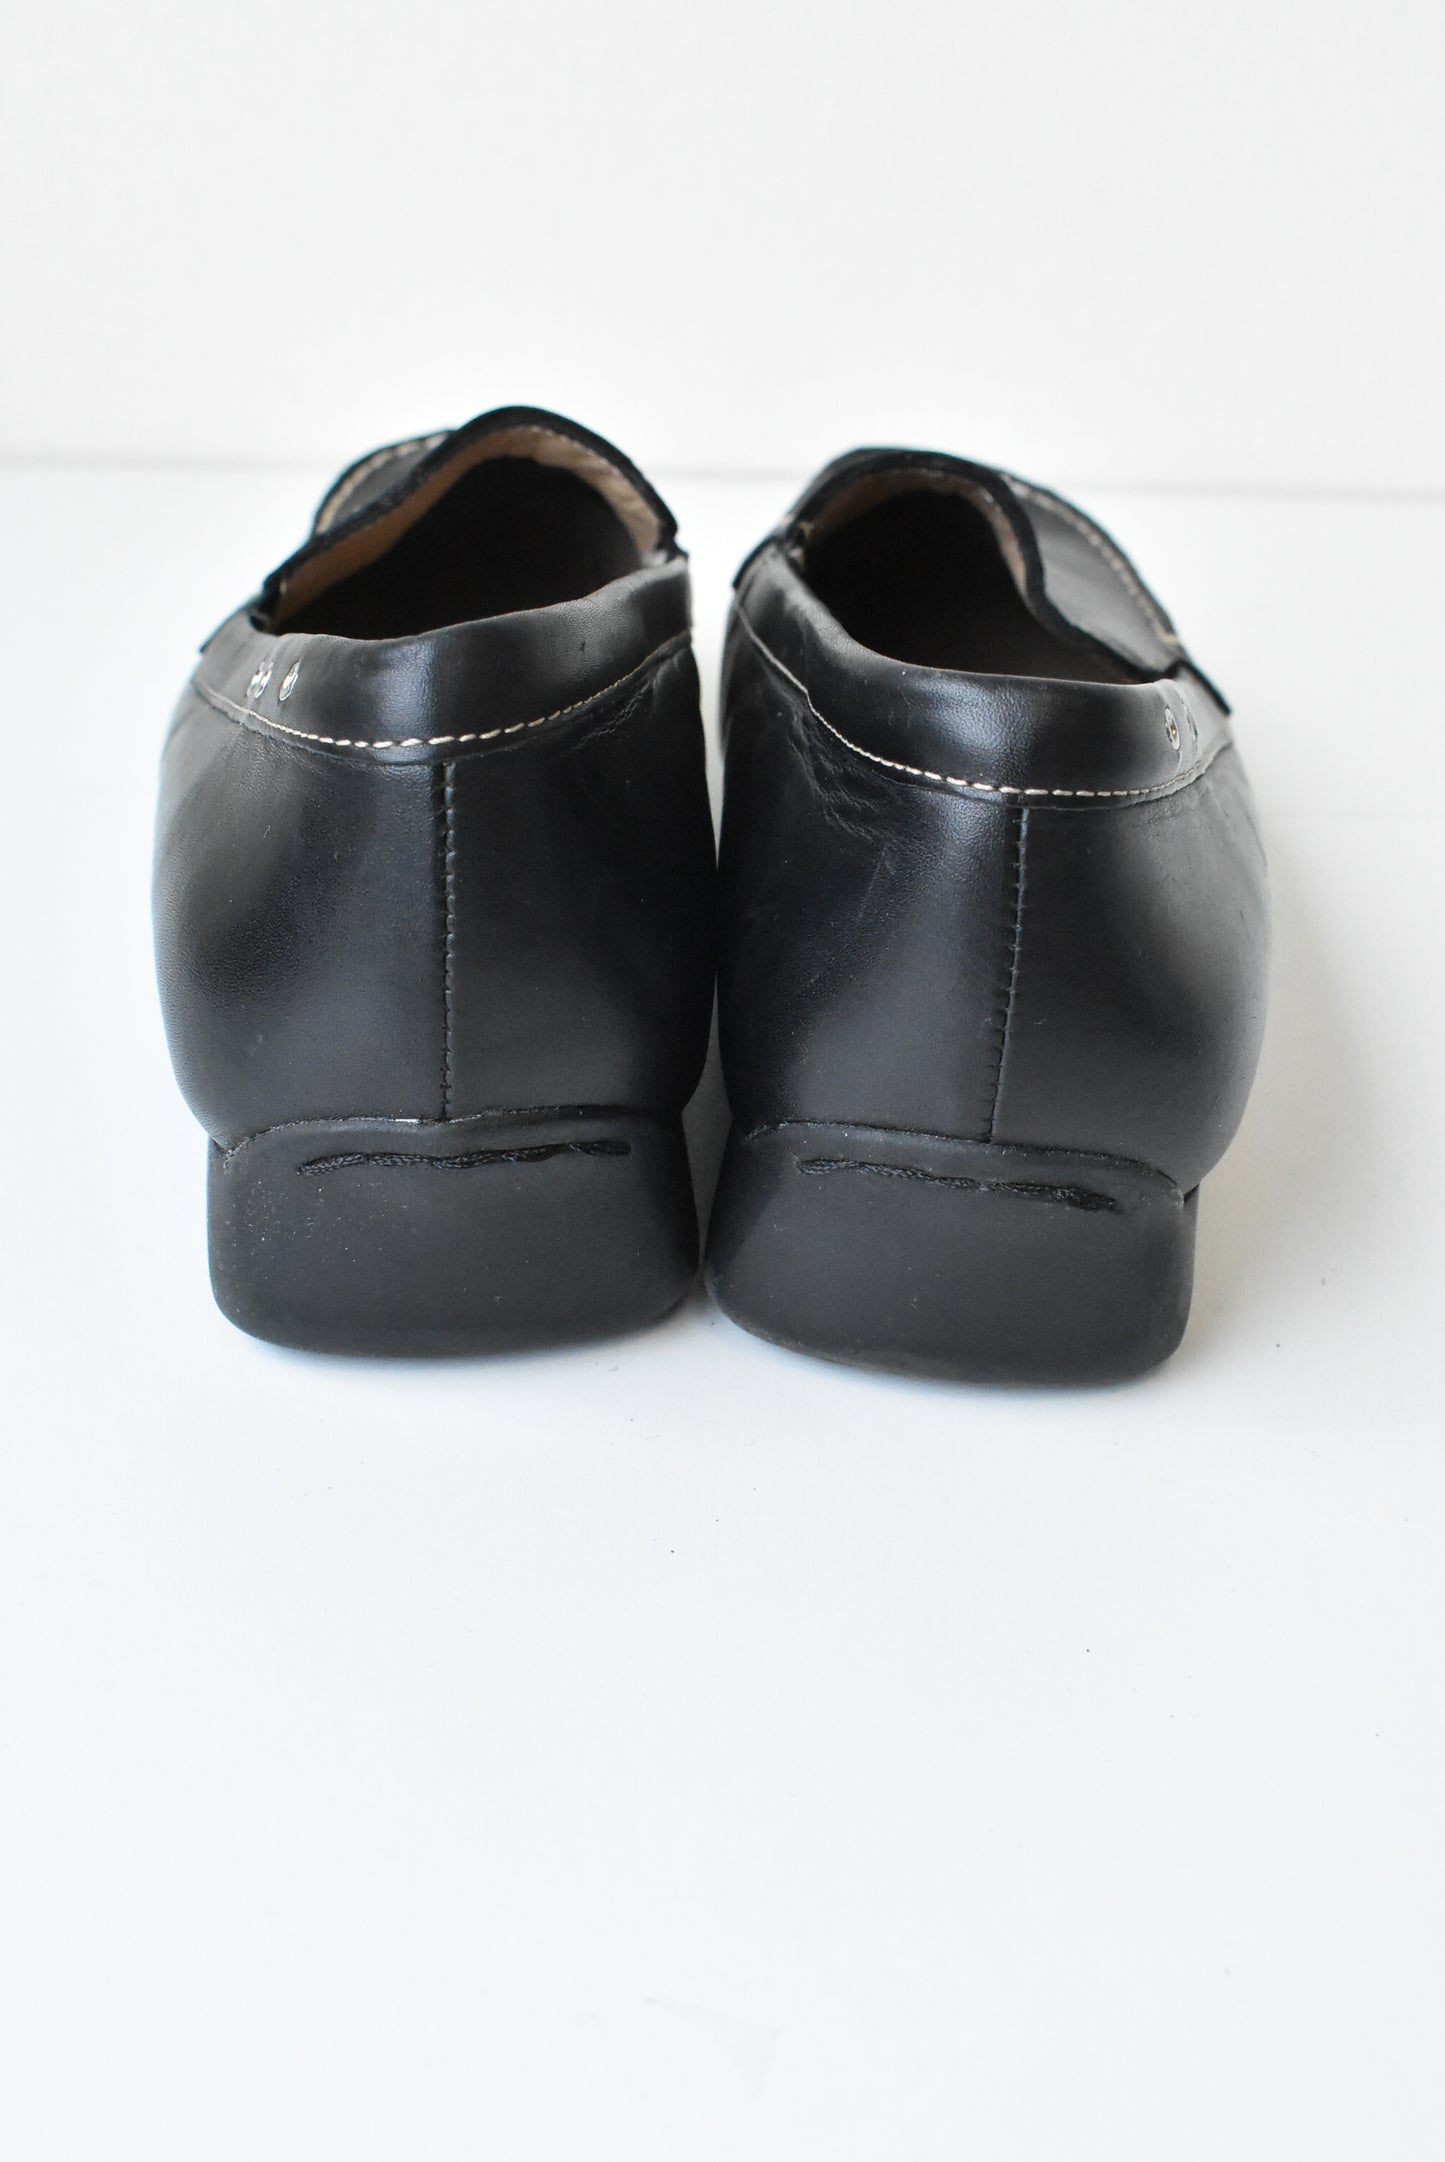 Ziera black leather women's shoes, size 39